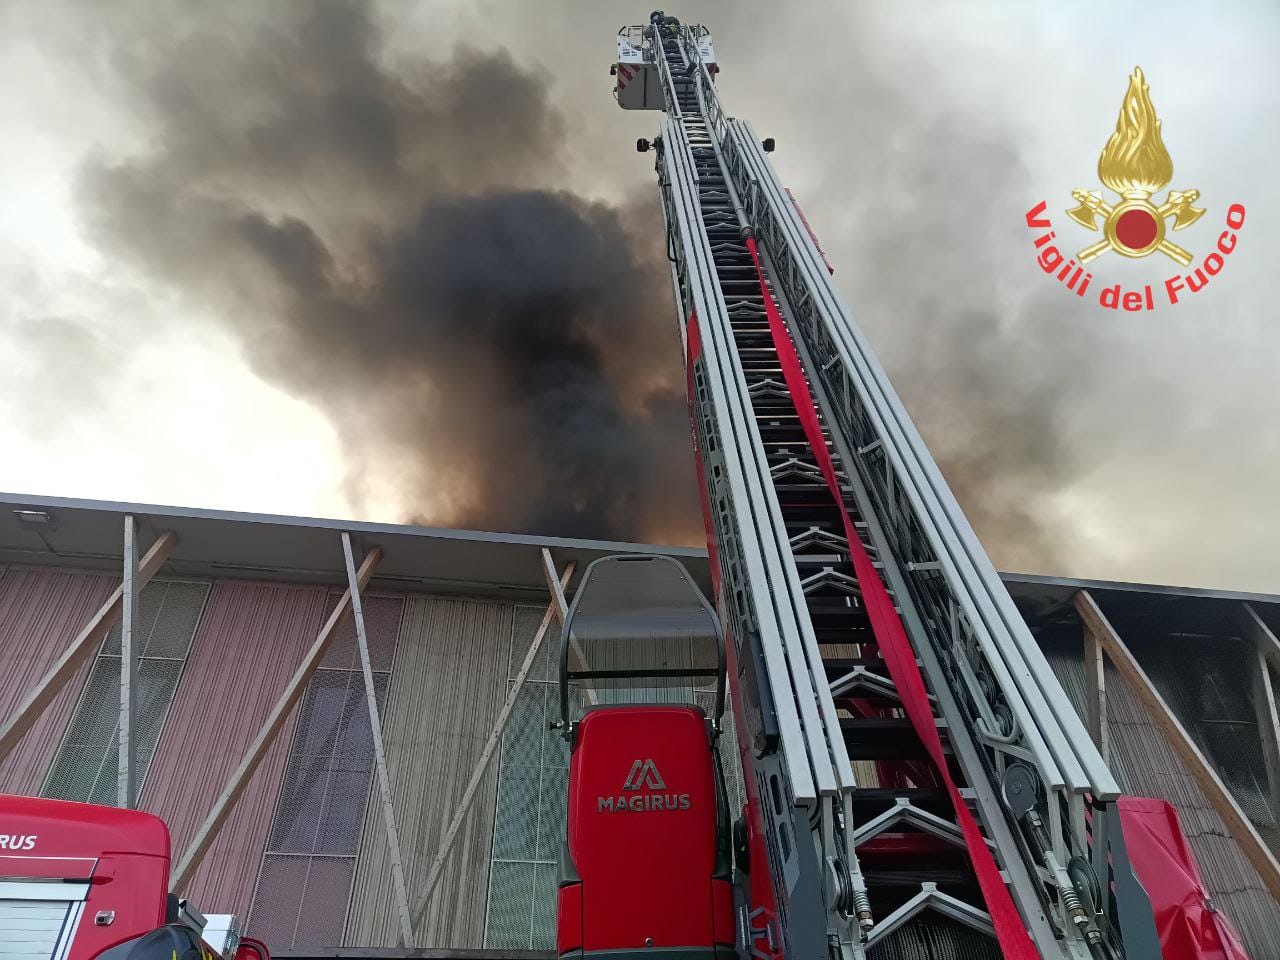 Incendio Cavenago Brianza - foto Vigili del fuoco